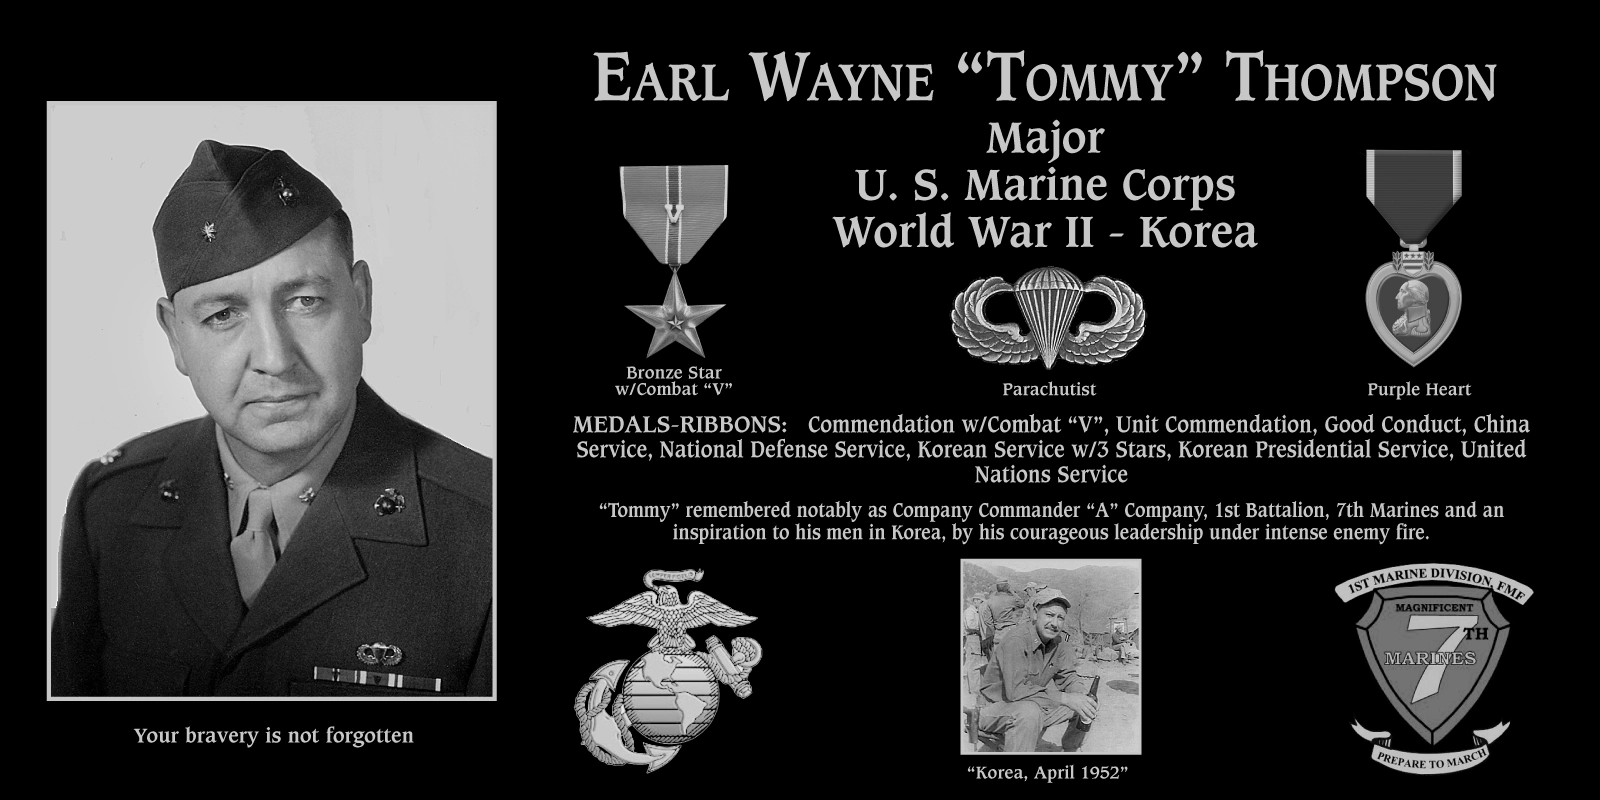 Earl Wayne “Tommy” Thompson